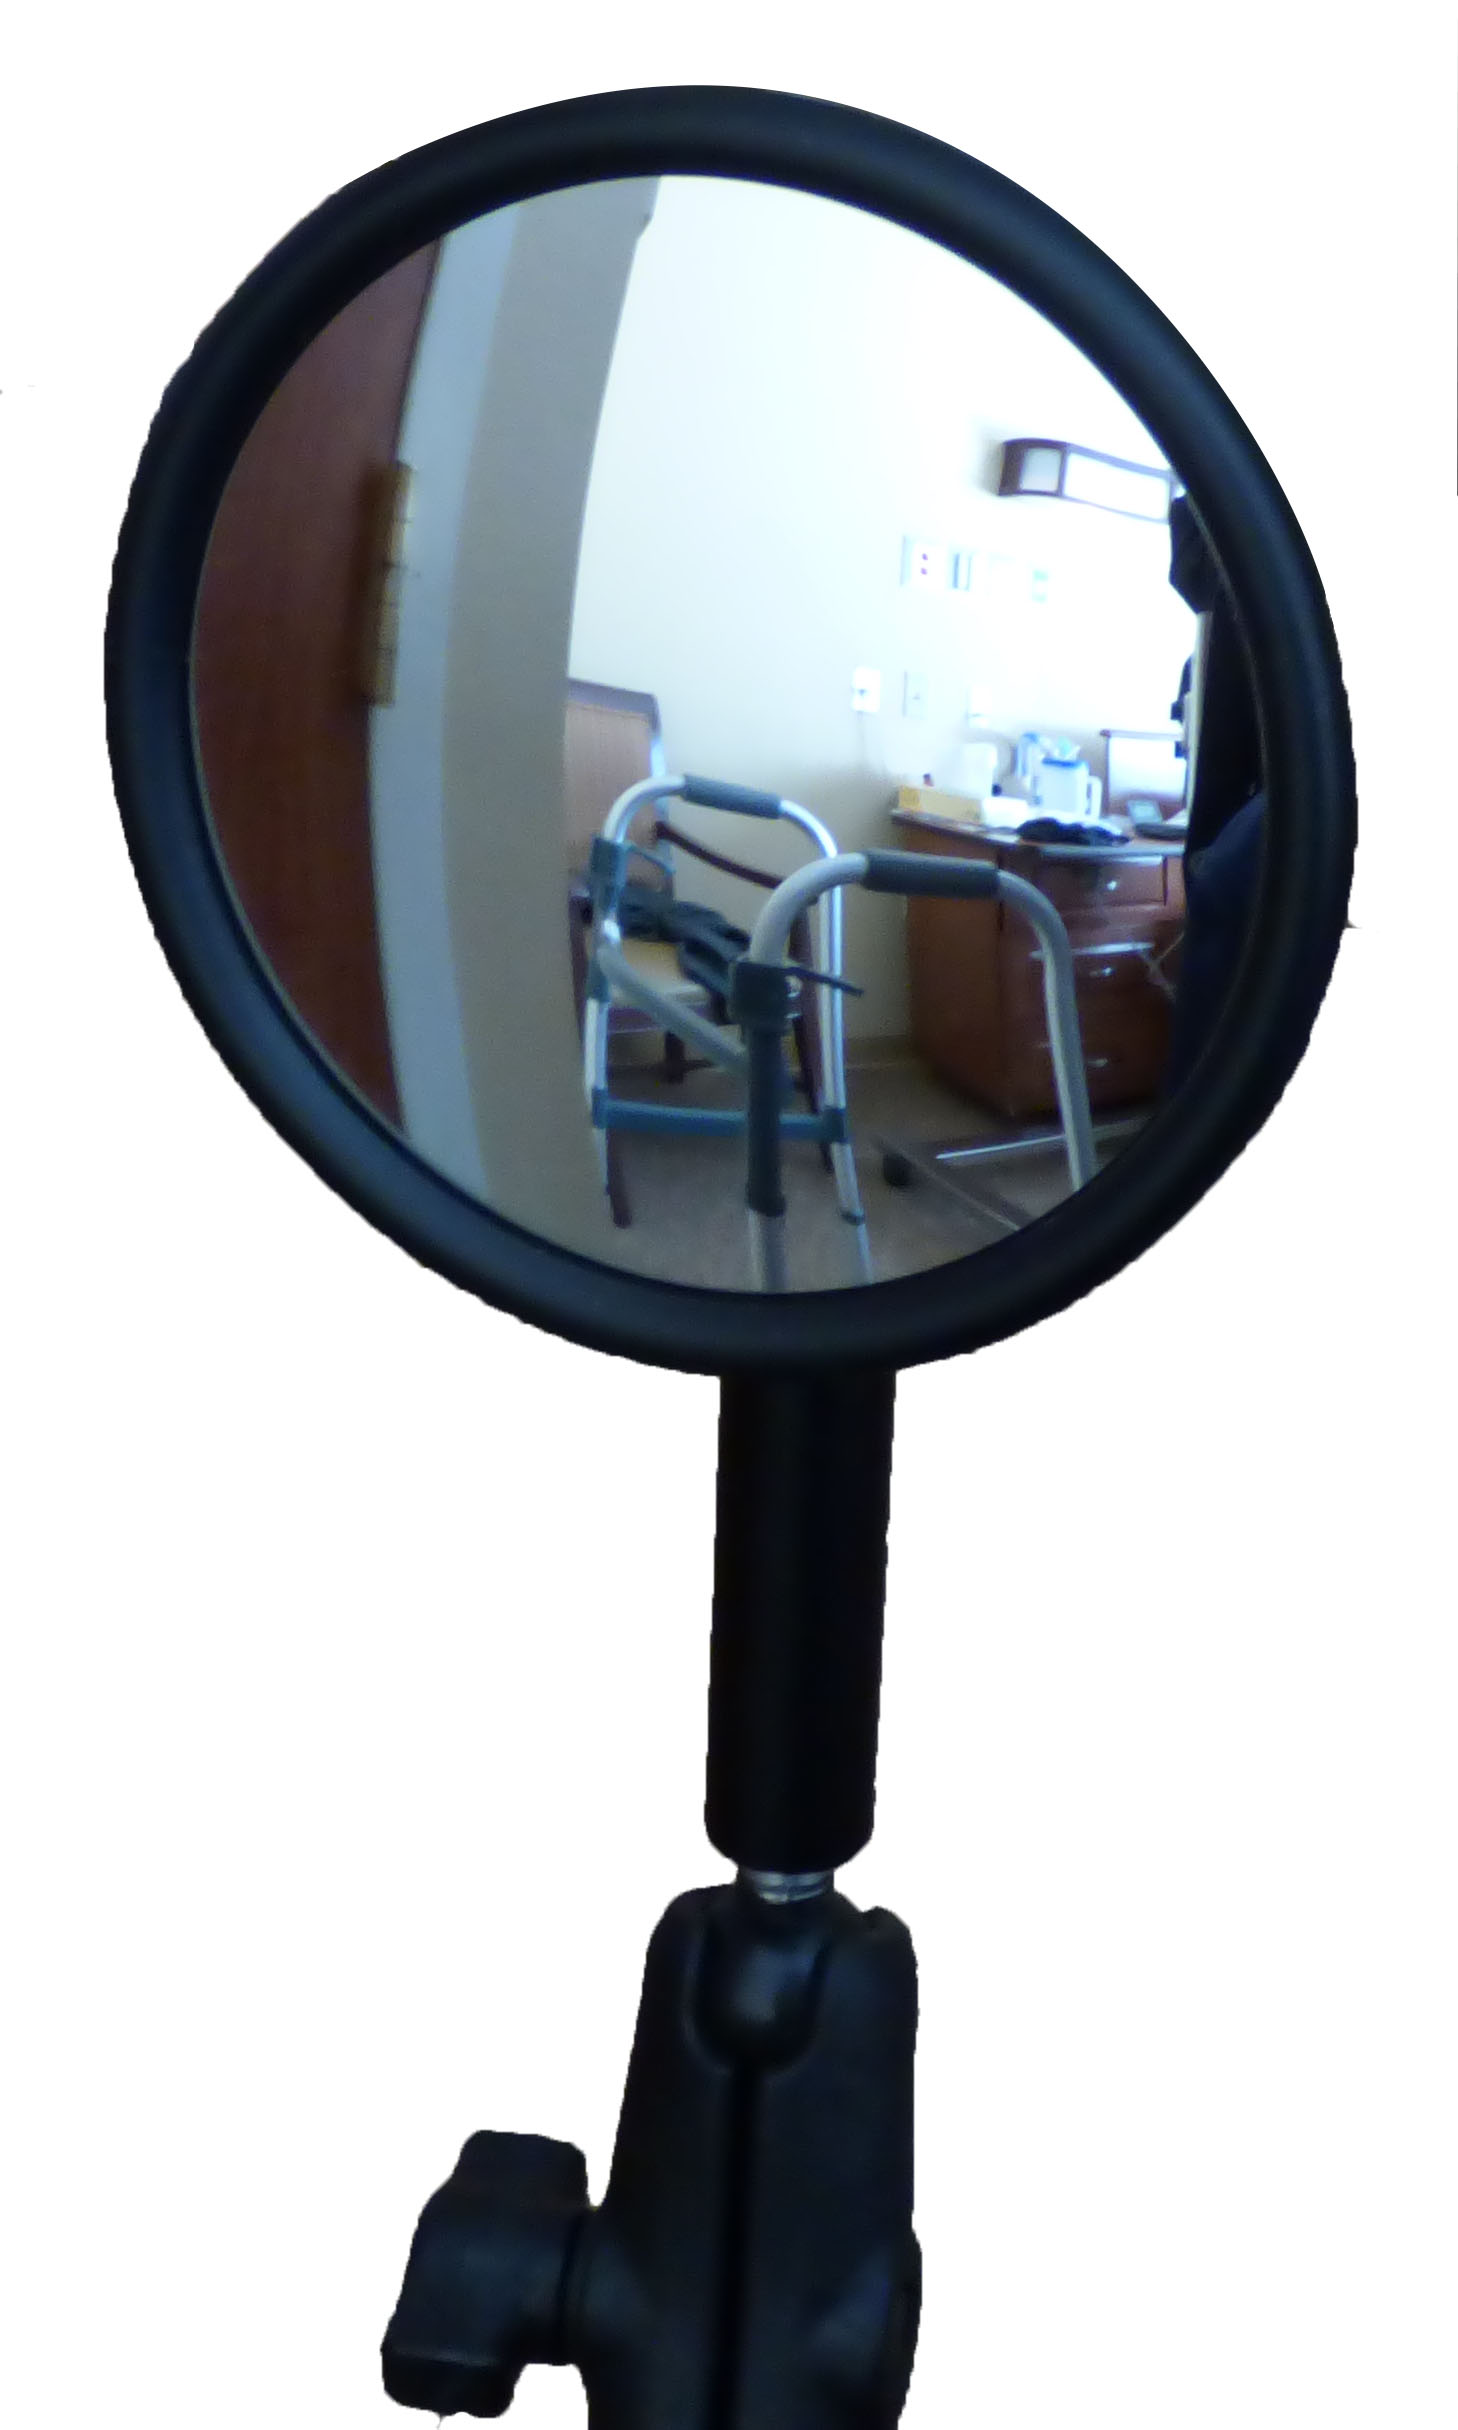 Mirror detach assembly